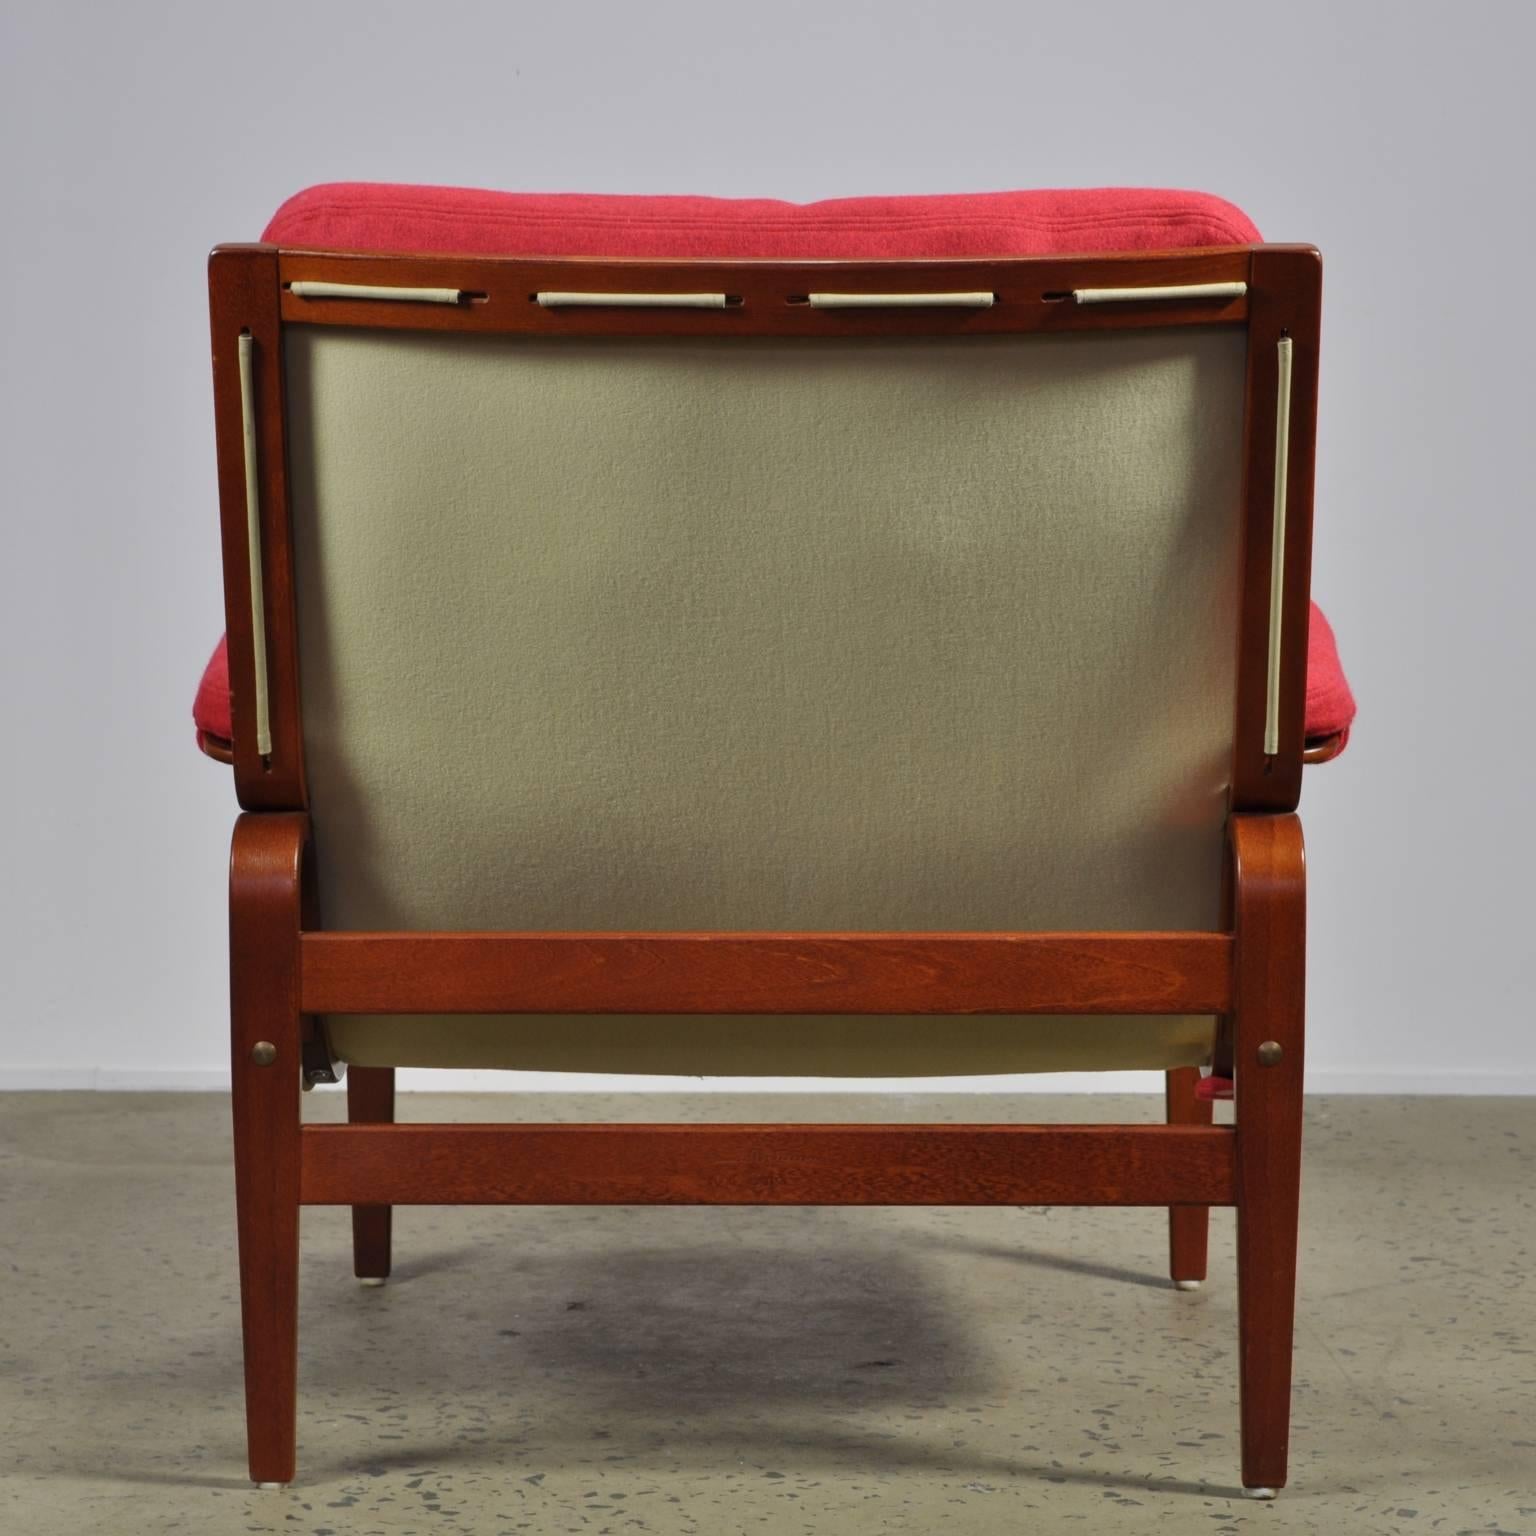 Scandinavian Modern Red Bruno Mathsson Ingrid Chair in Woollen Felt Fabric Made by DUX For Sale